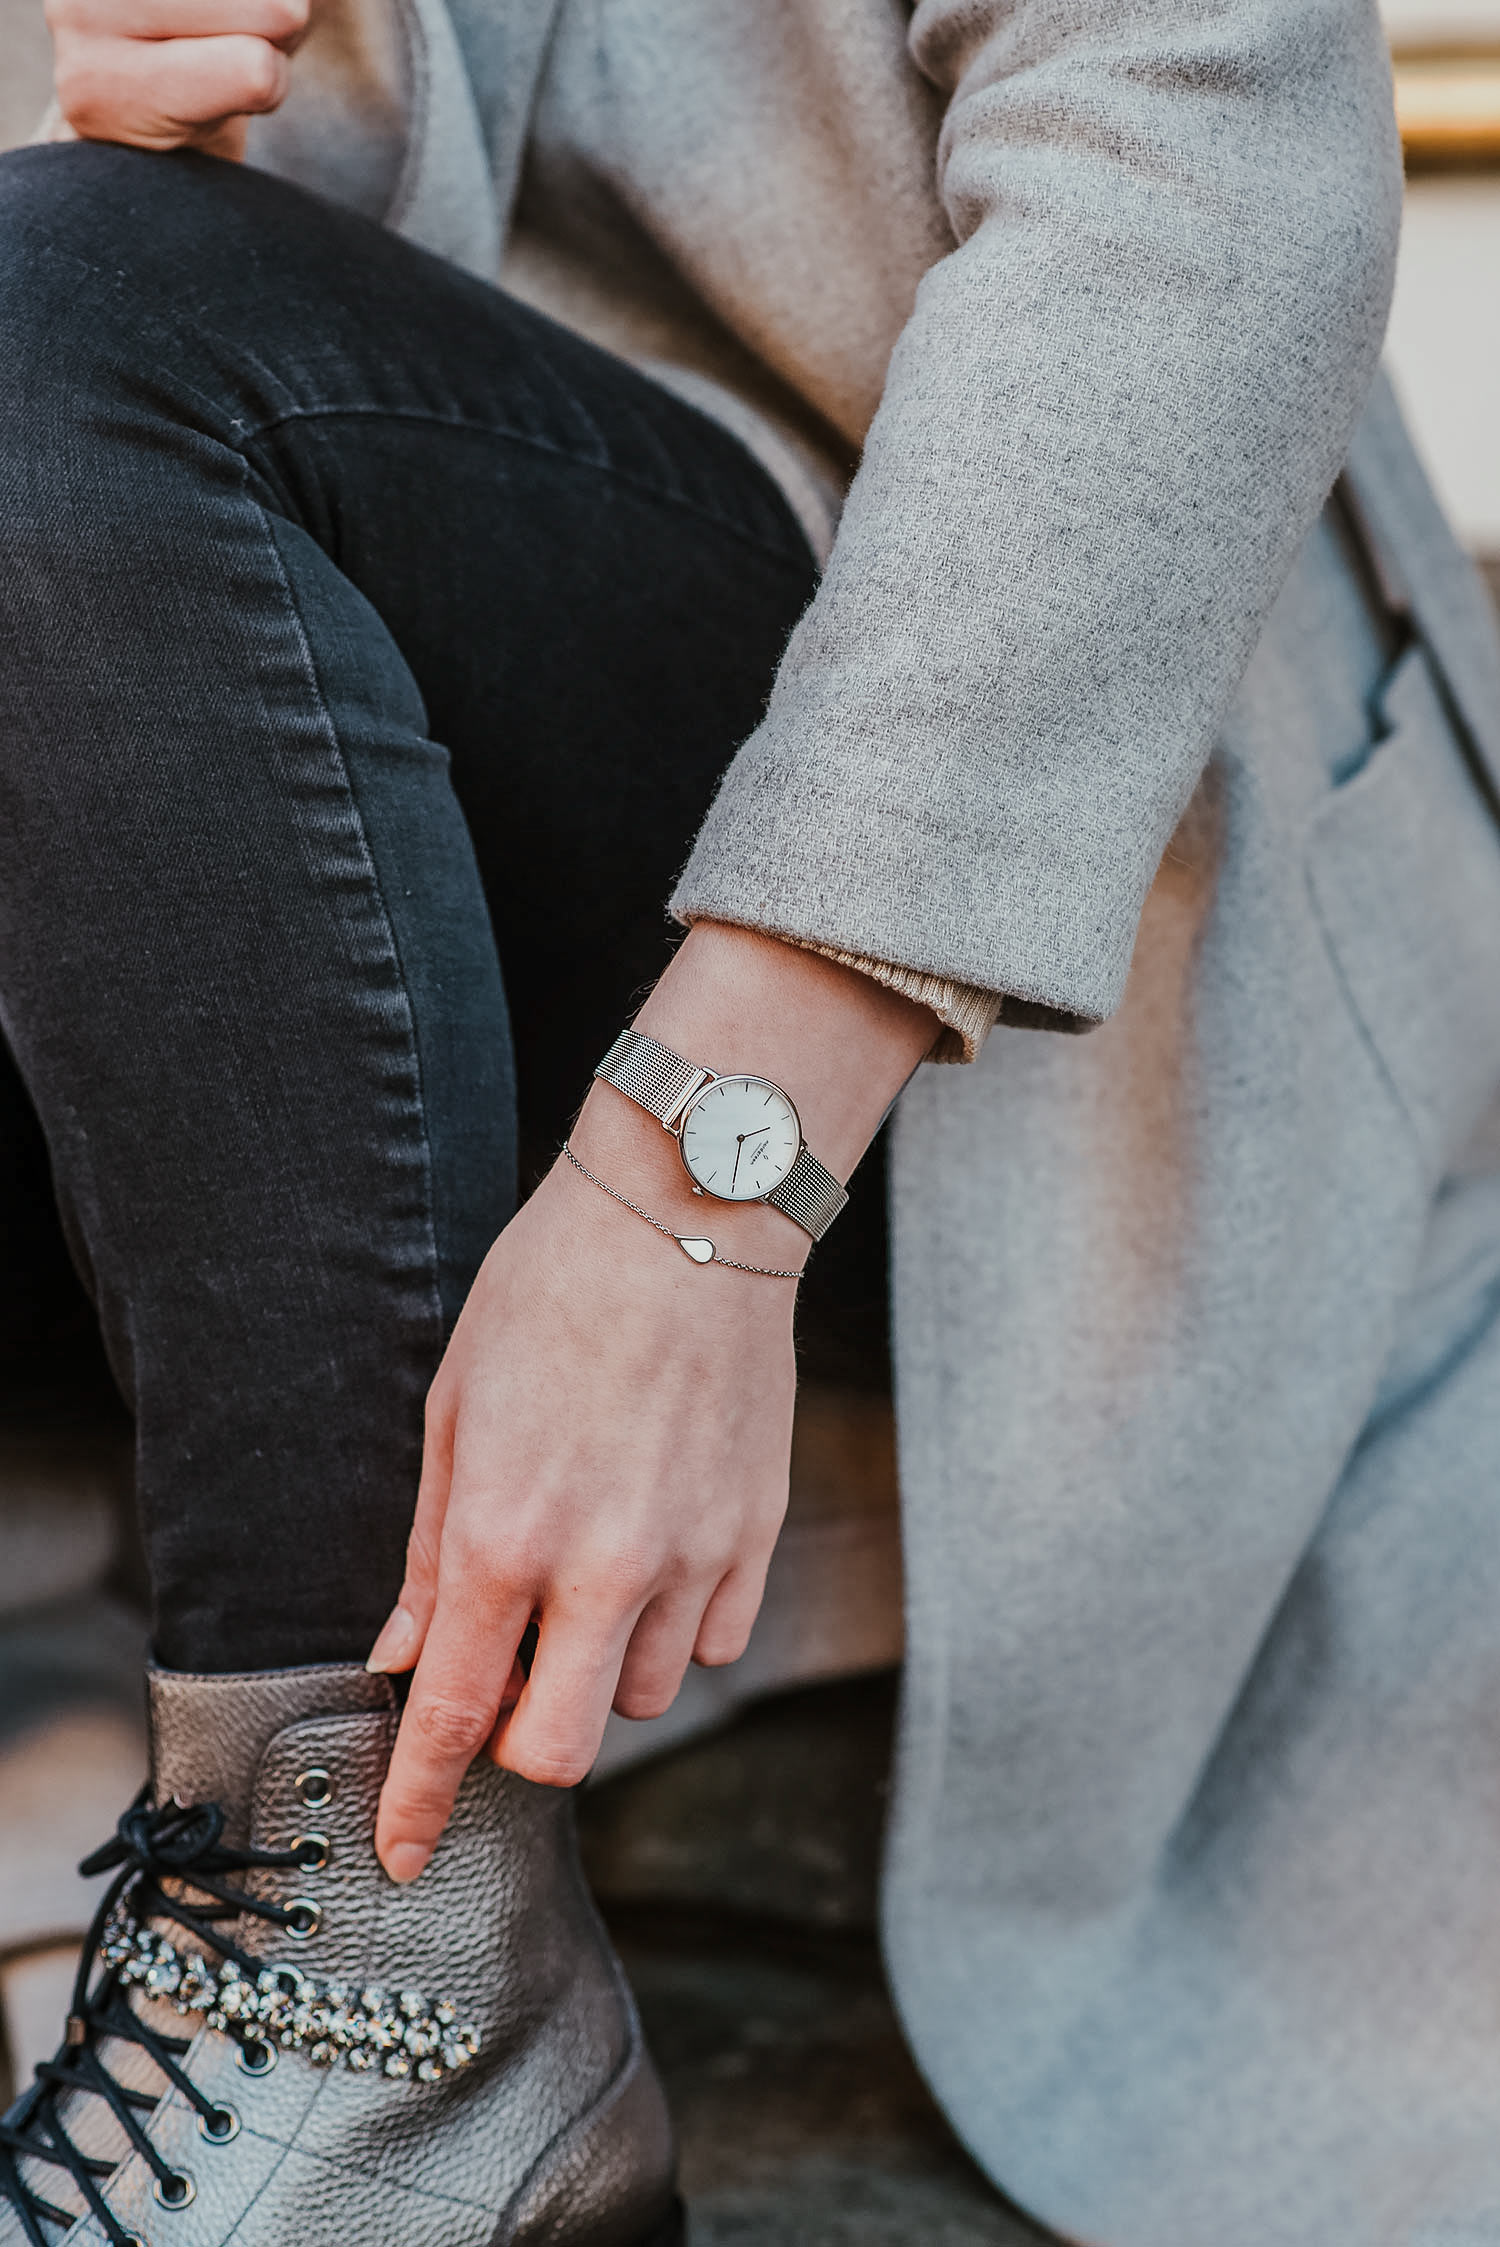 The Sleek, Petite, Elegant Watches Trend For Women – FORD LA FEMME